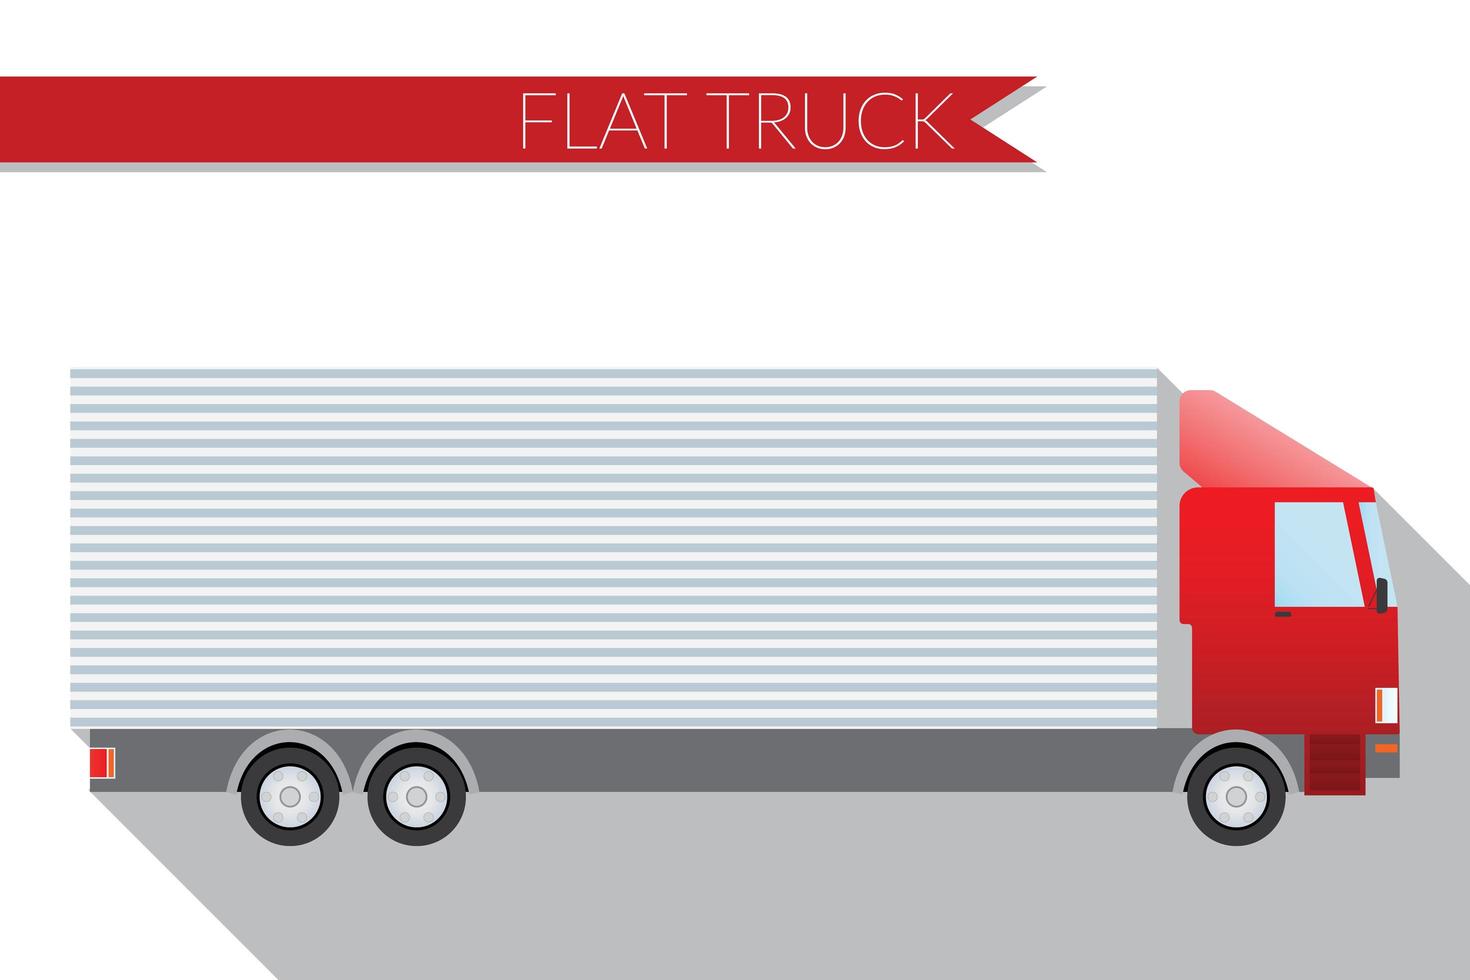 Flat design vector illustration city Transportation, truck for transportation cargo, side view